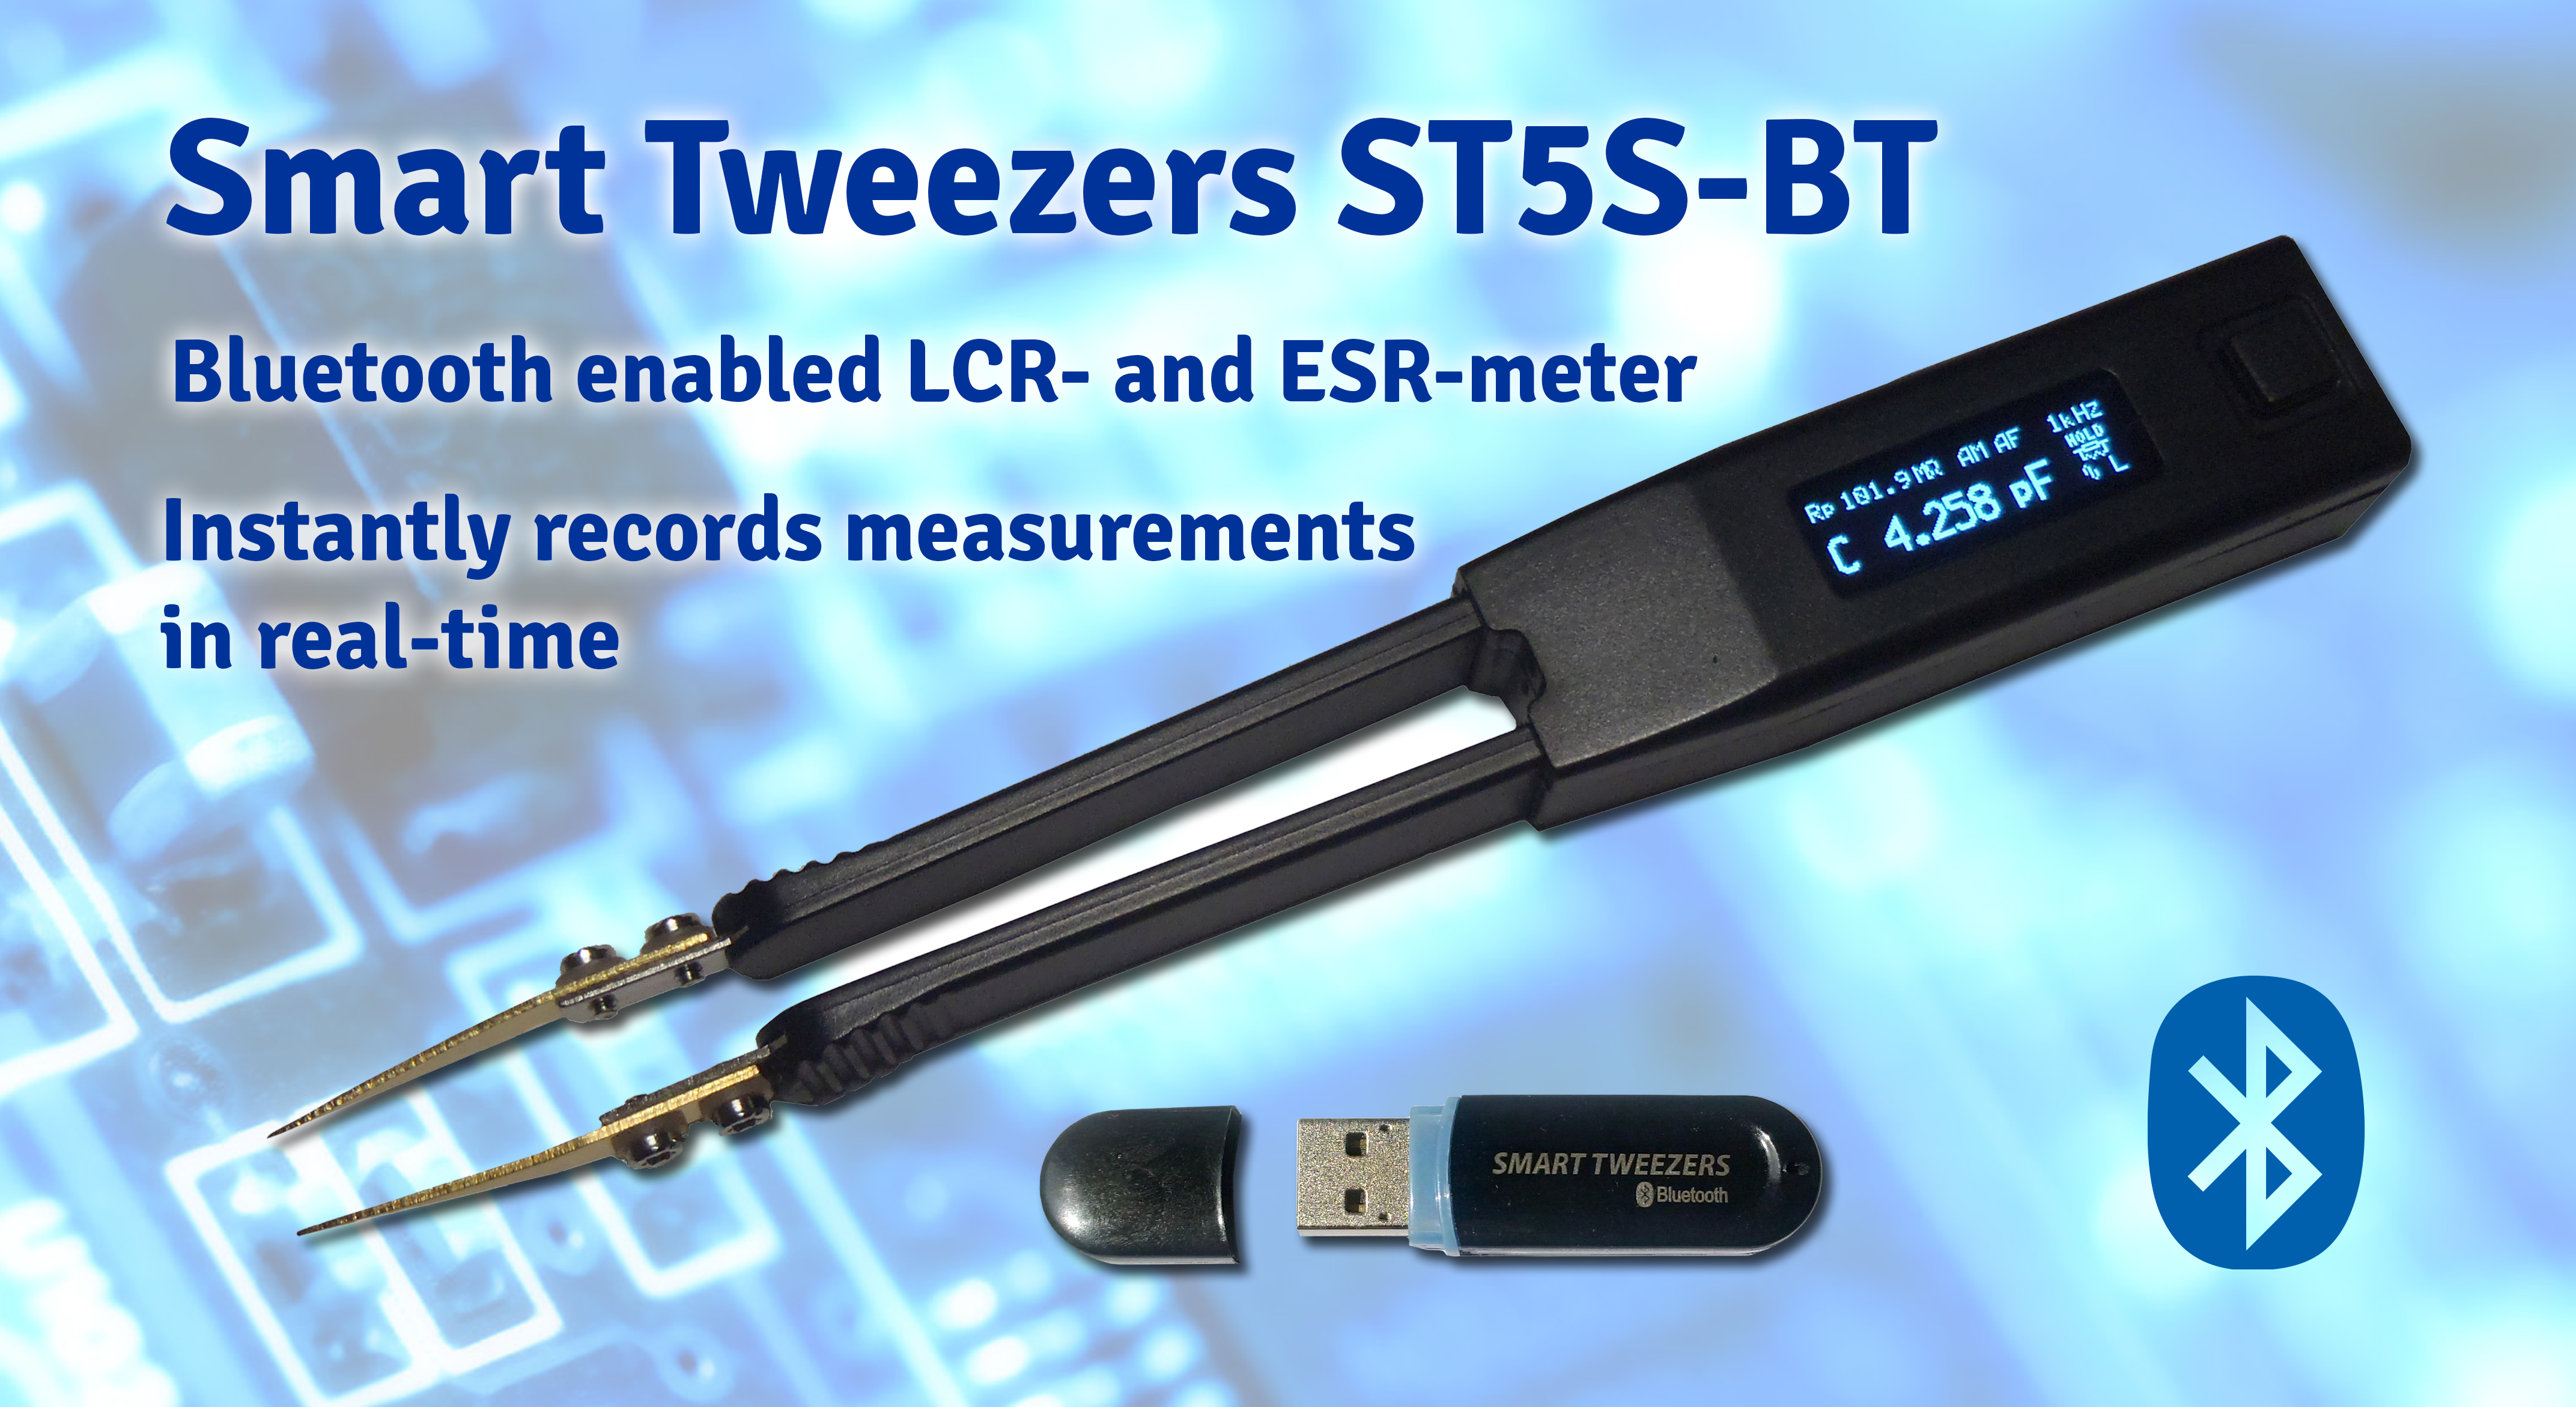 Smart Tweezers ST5S-BT with Bluetooth Connectivity